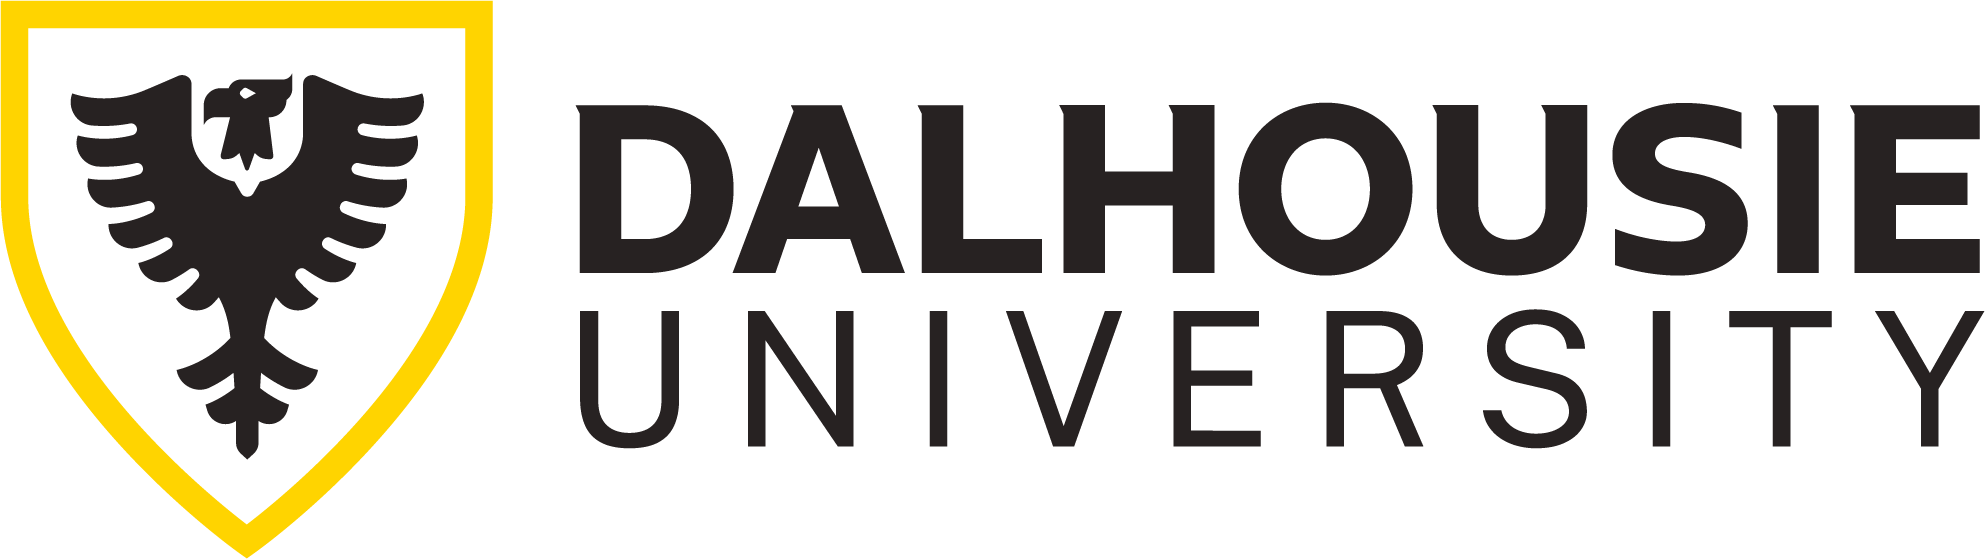 Dalhousie University Libraries - Log In